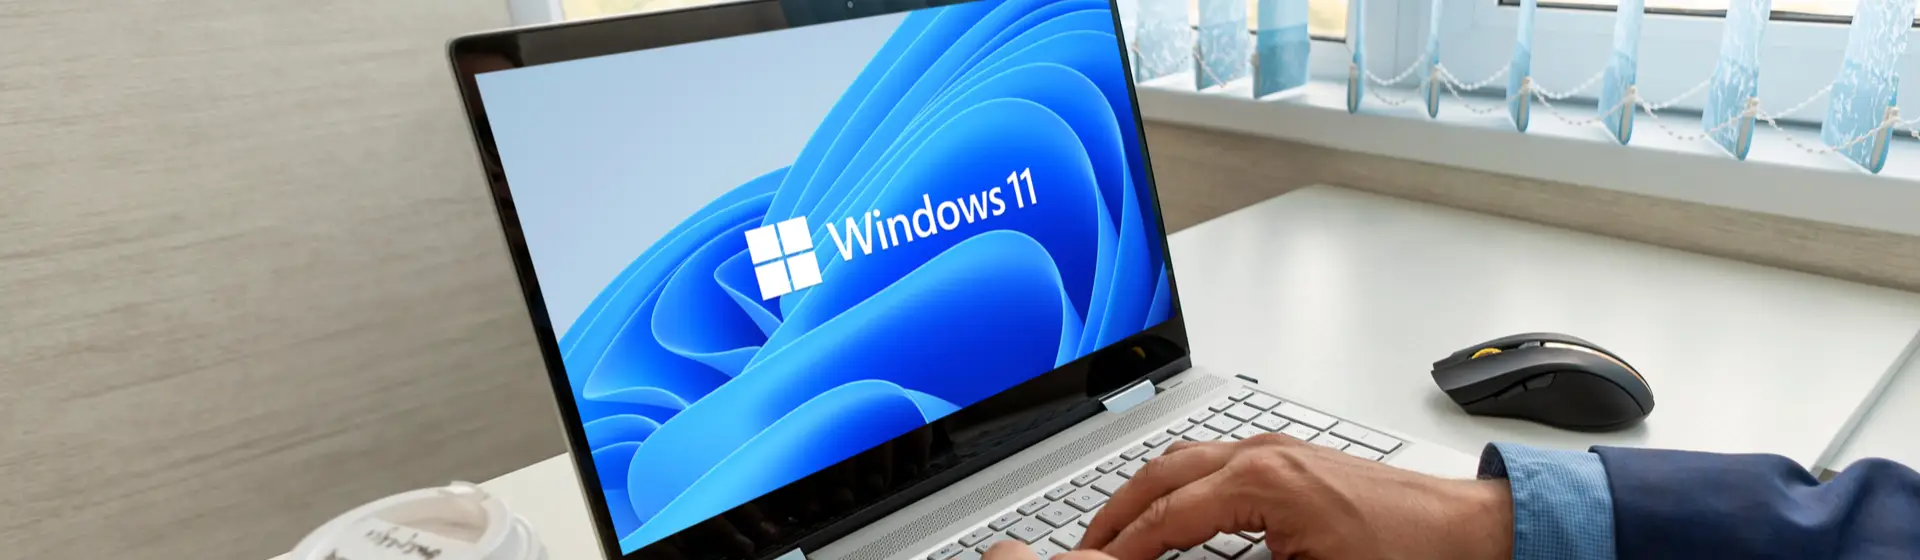 Capa do post: Requisitos Windows 11: saiba se seu PC consegue rodar o sistema